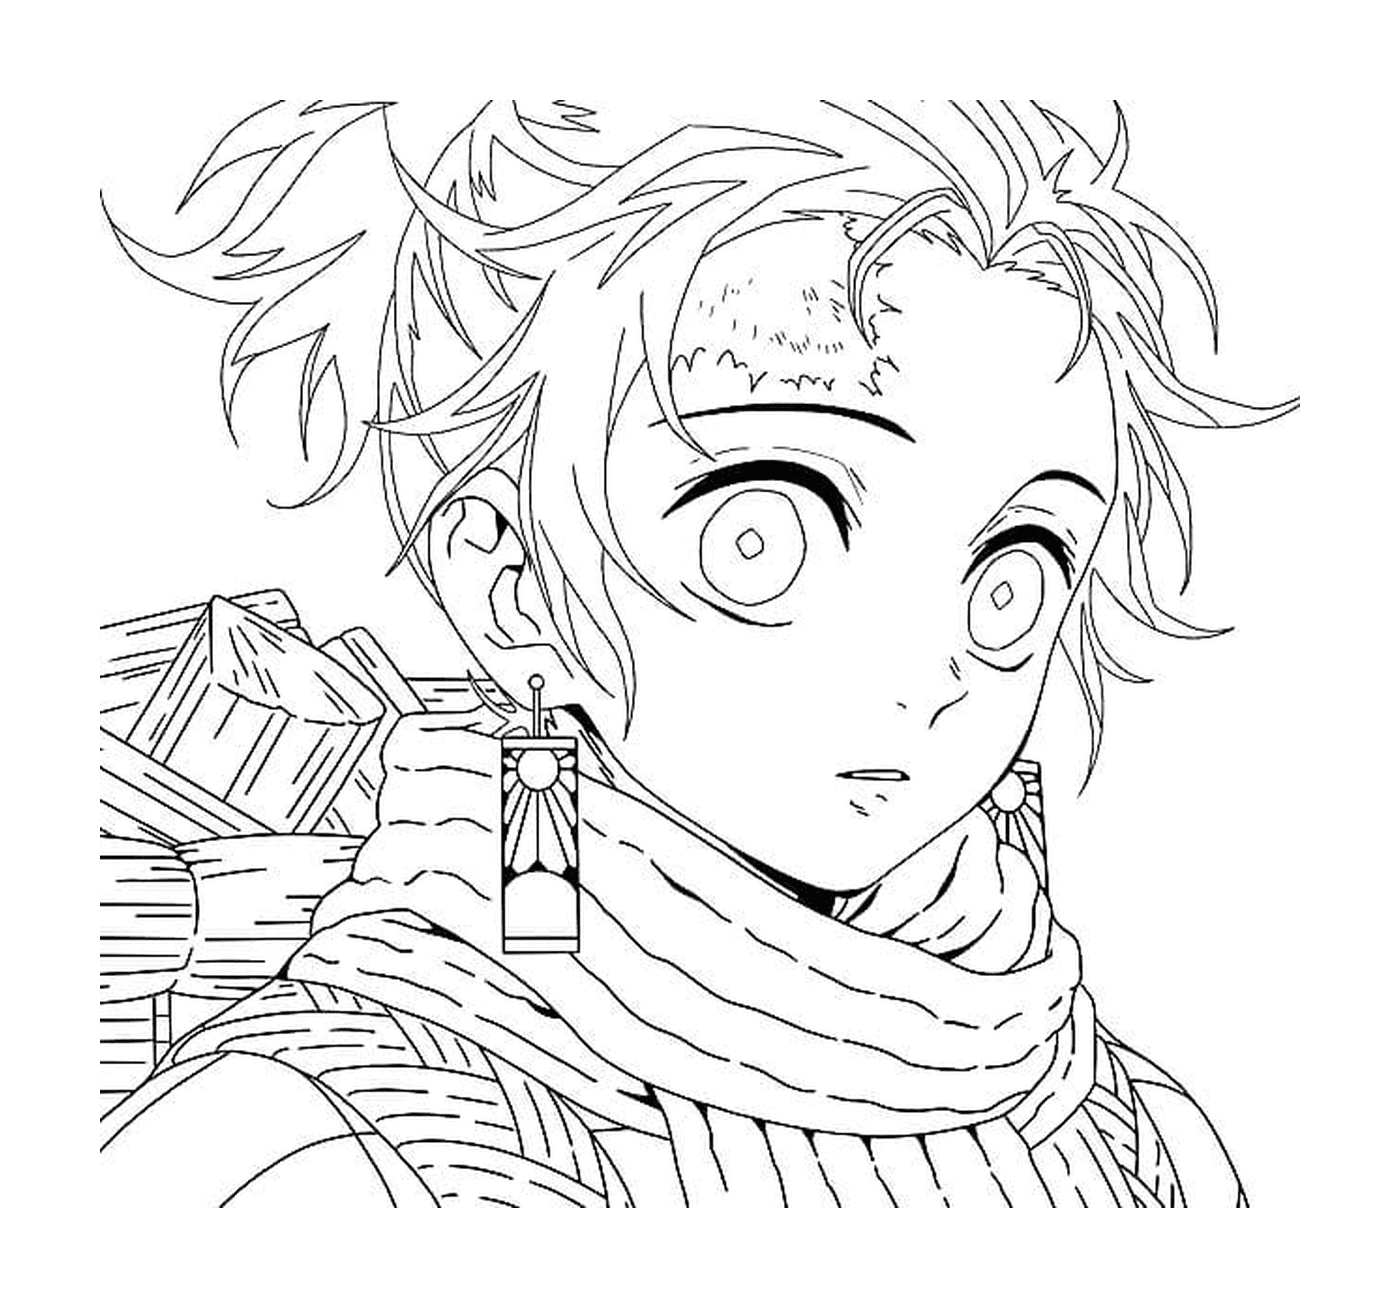  Cute Tanjiro with a scarf 